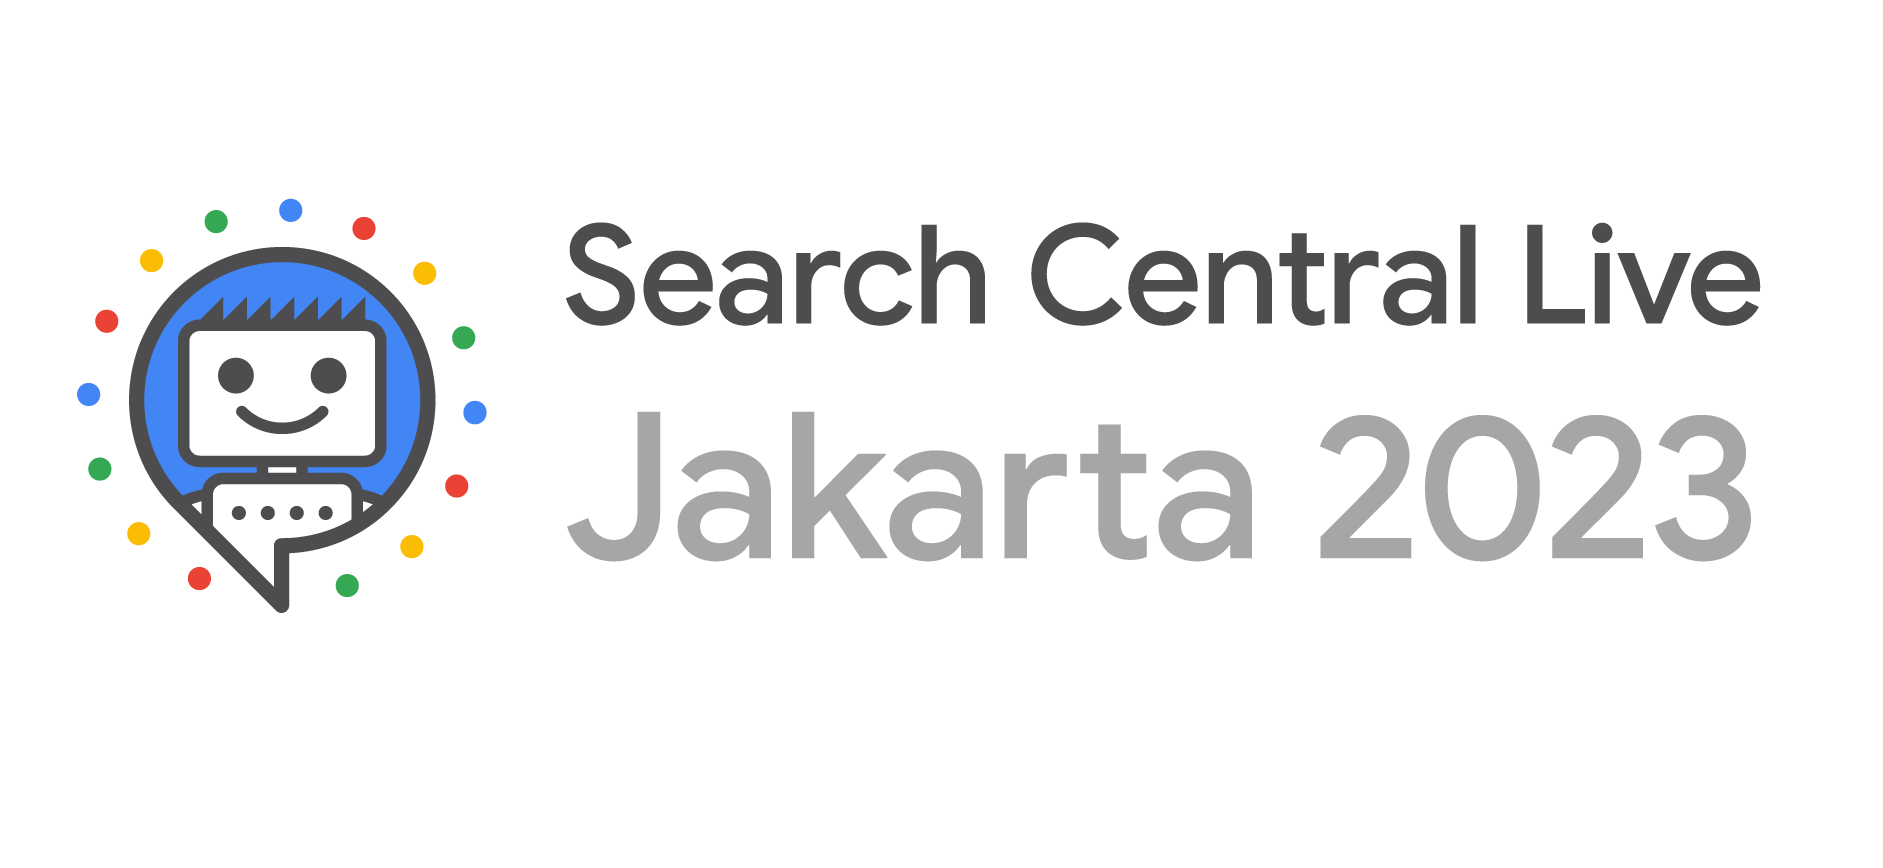 Search Central Live Jakarta 2023